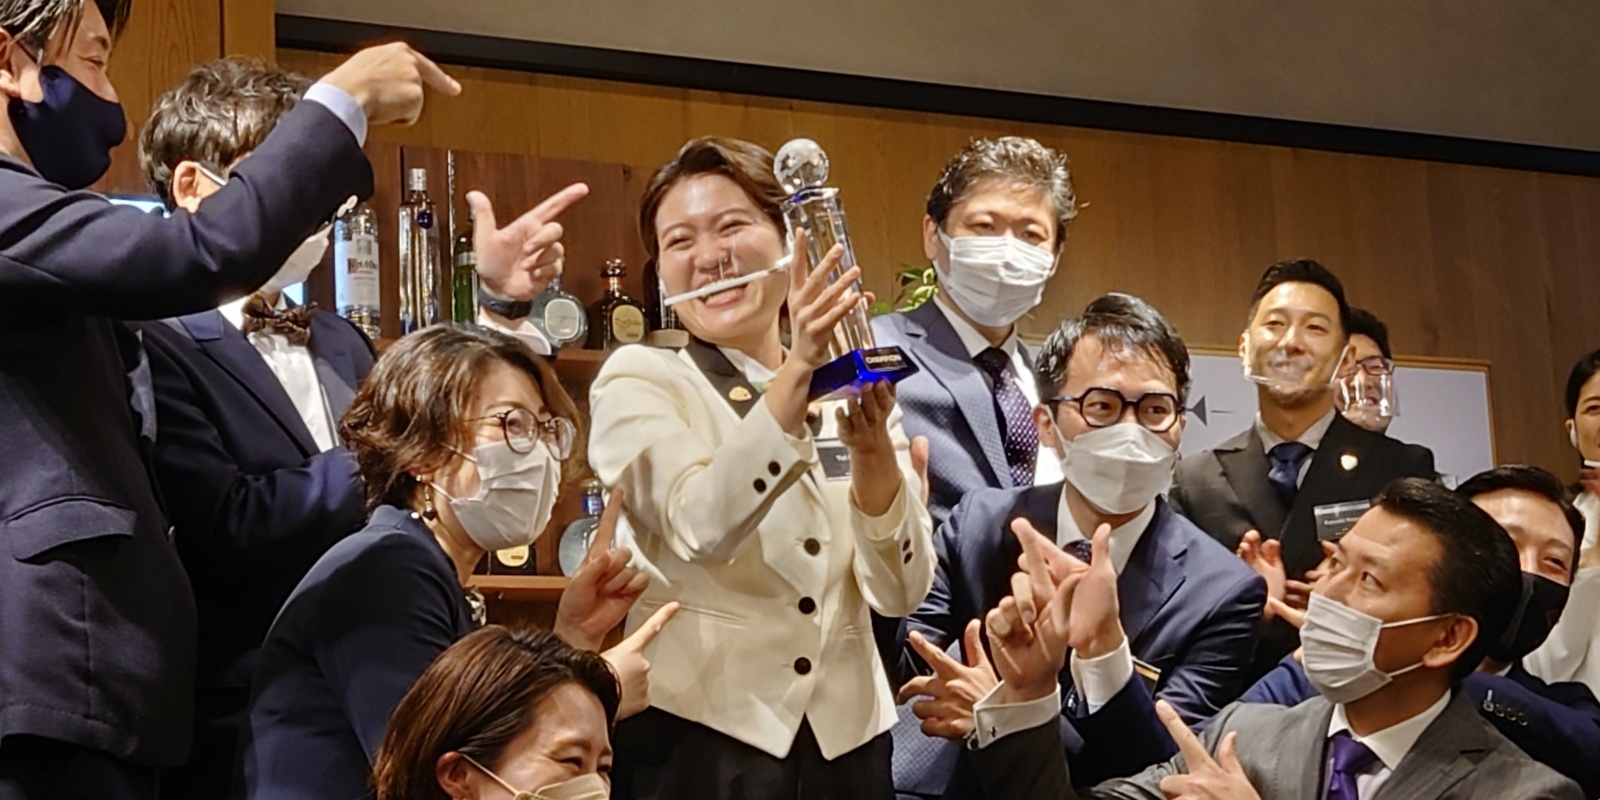 DIAGEO WORLD CLASS 2022
日本代表は、宮崎県の緒方唯さんに決定！